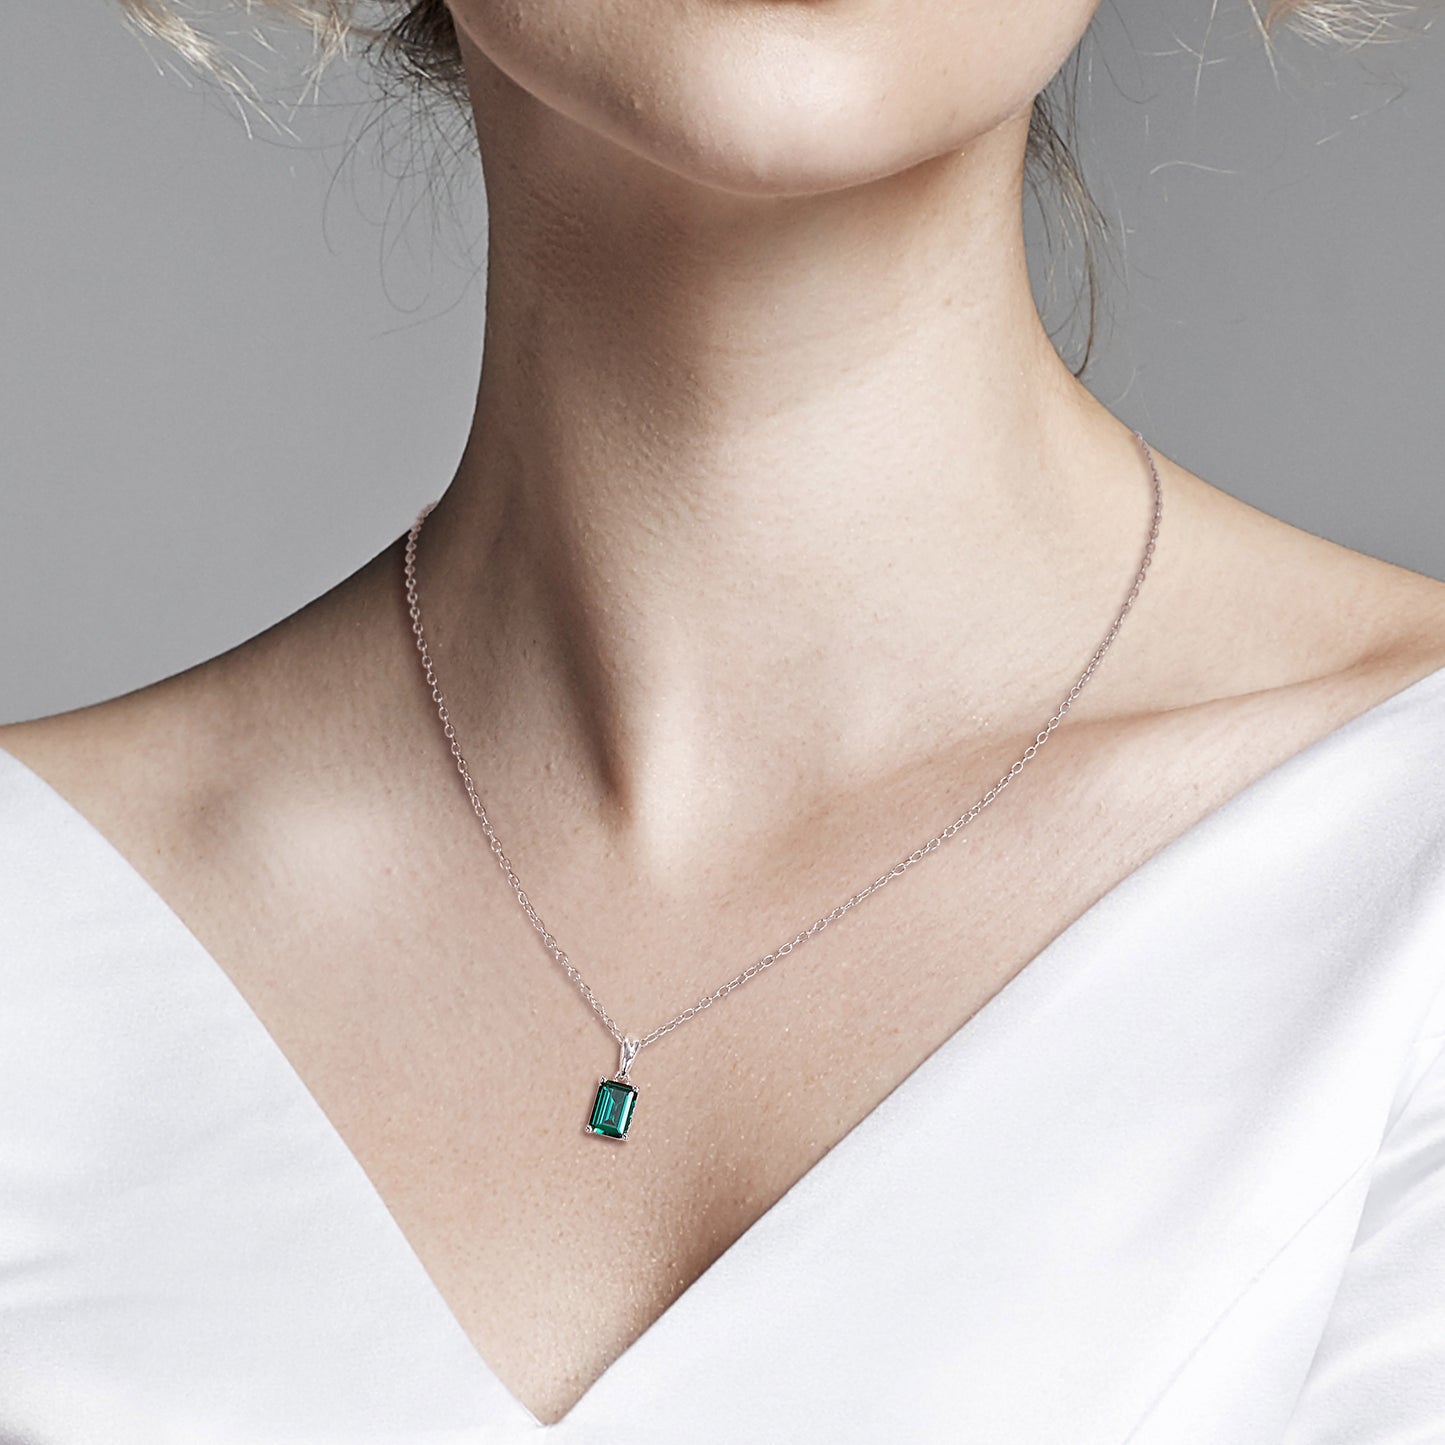 7/8 ct TGW Created emerald fashion pendant with chain silver